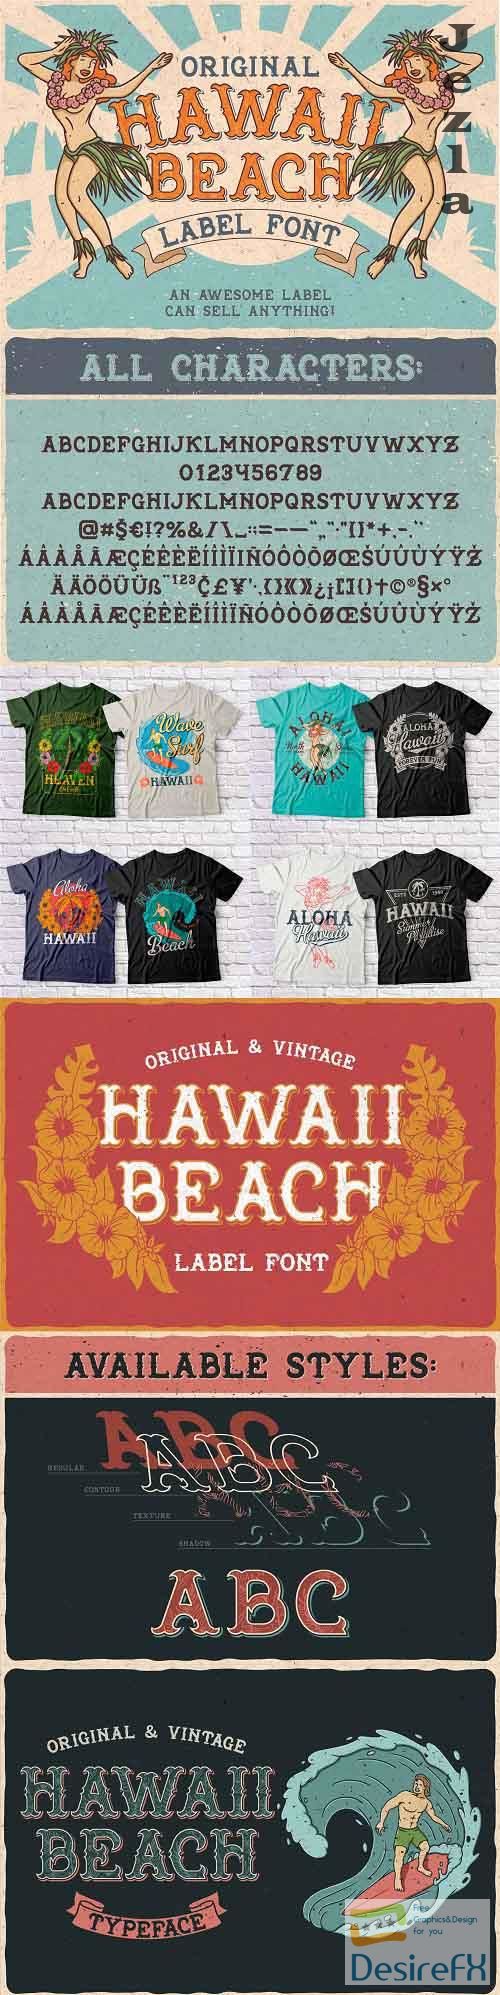 Hawaii Beach. Font &amp; T-shirts - 24658585 - 4101621